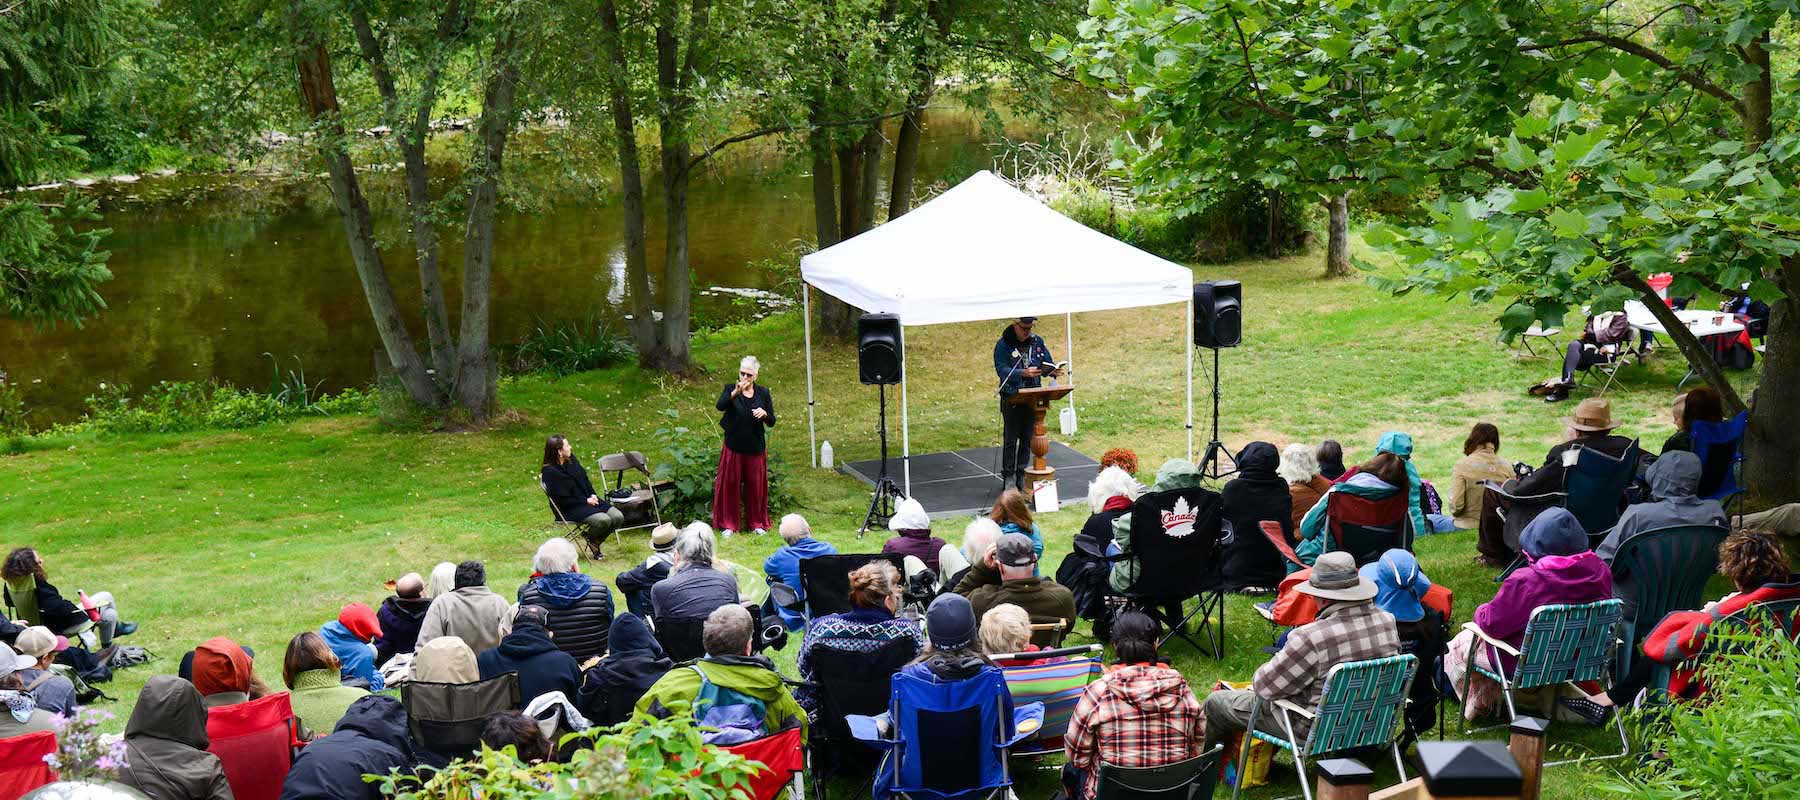 Festival goers listen to a reading at the Eden Mills Writers’ Festival. (Photo: Dan Harasymchuk)